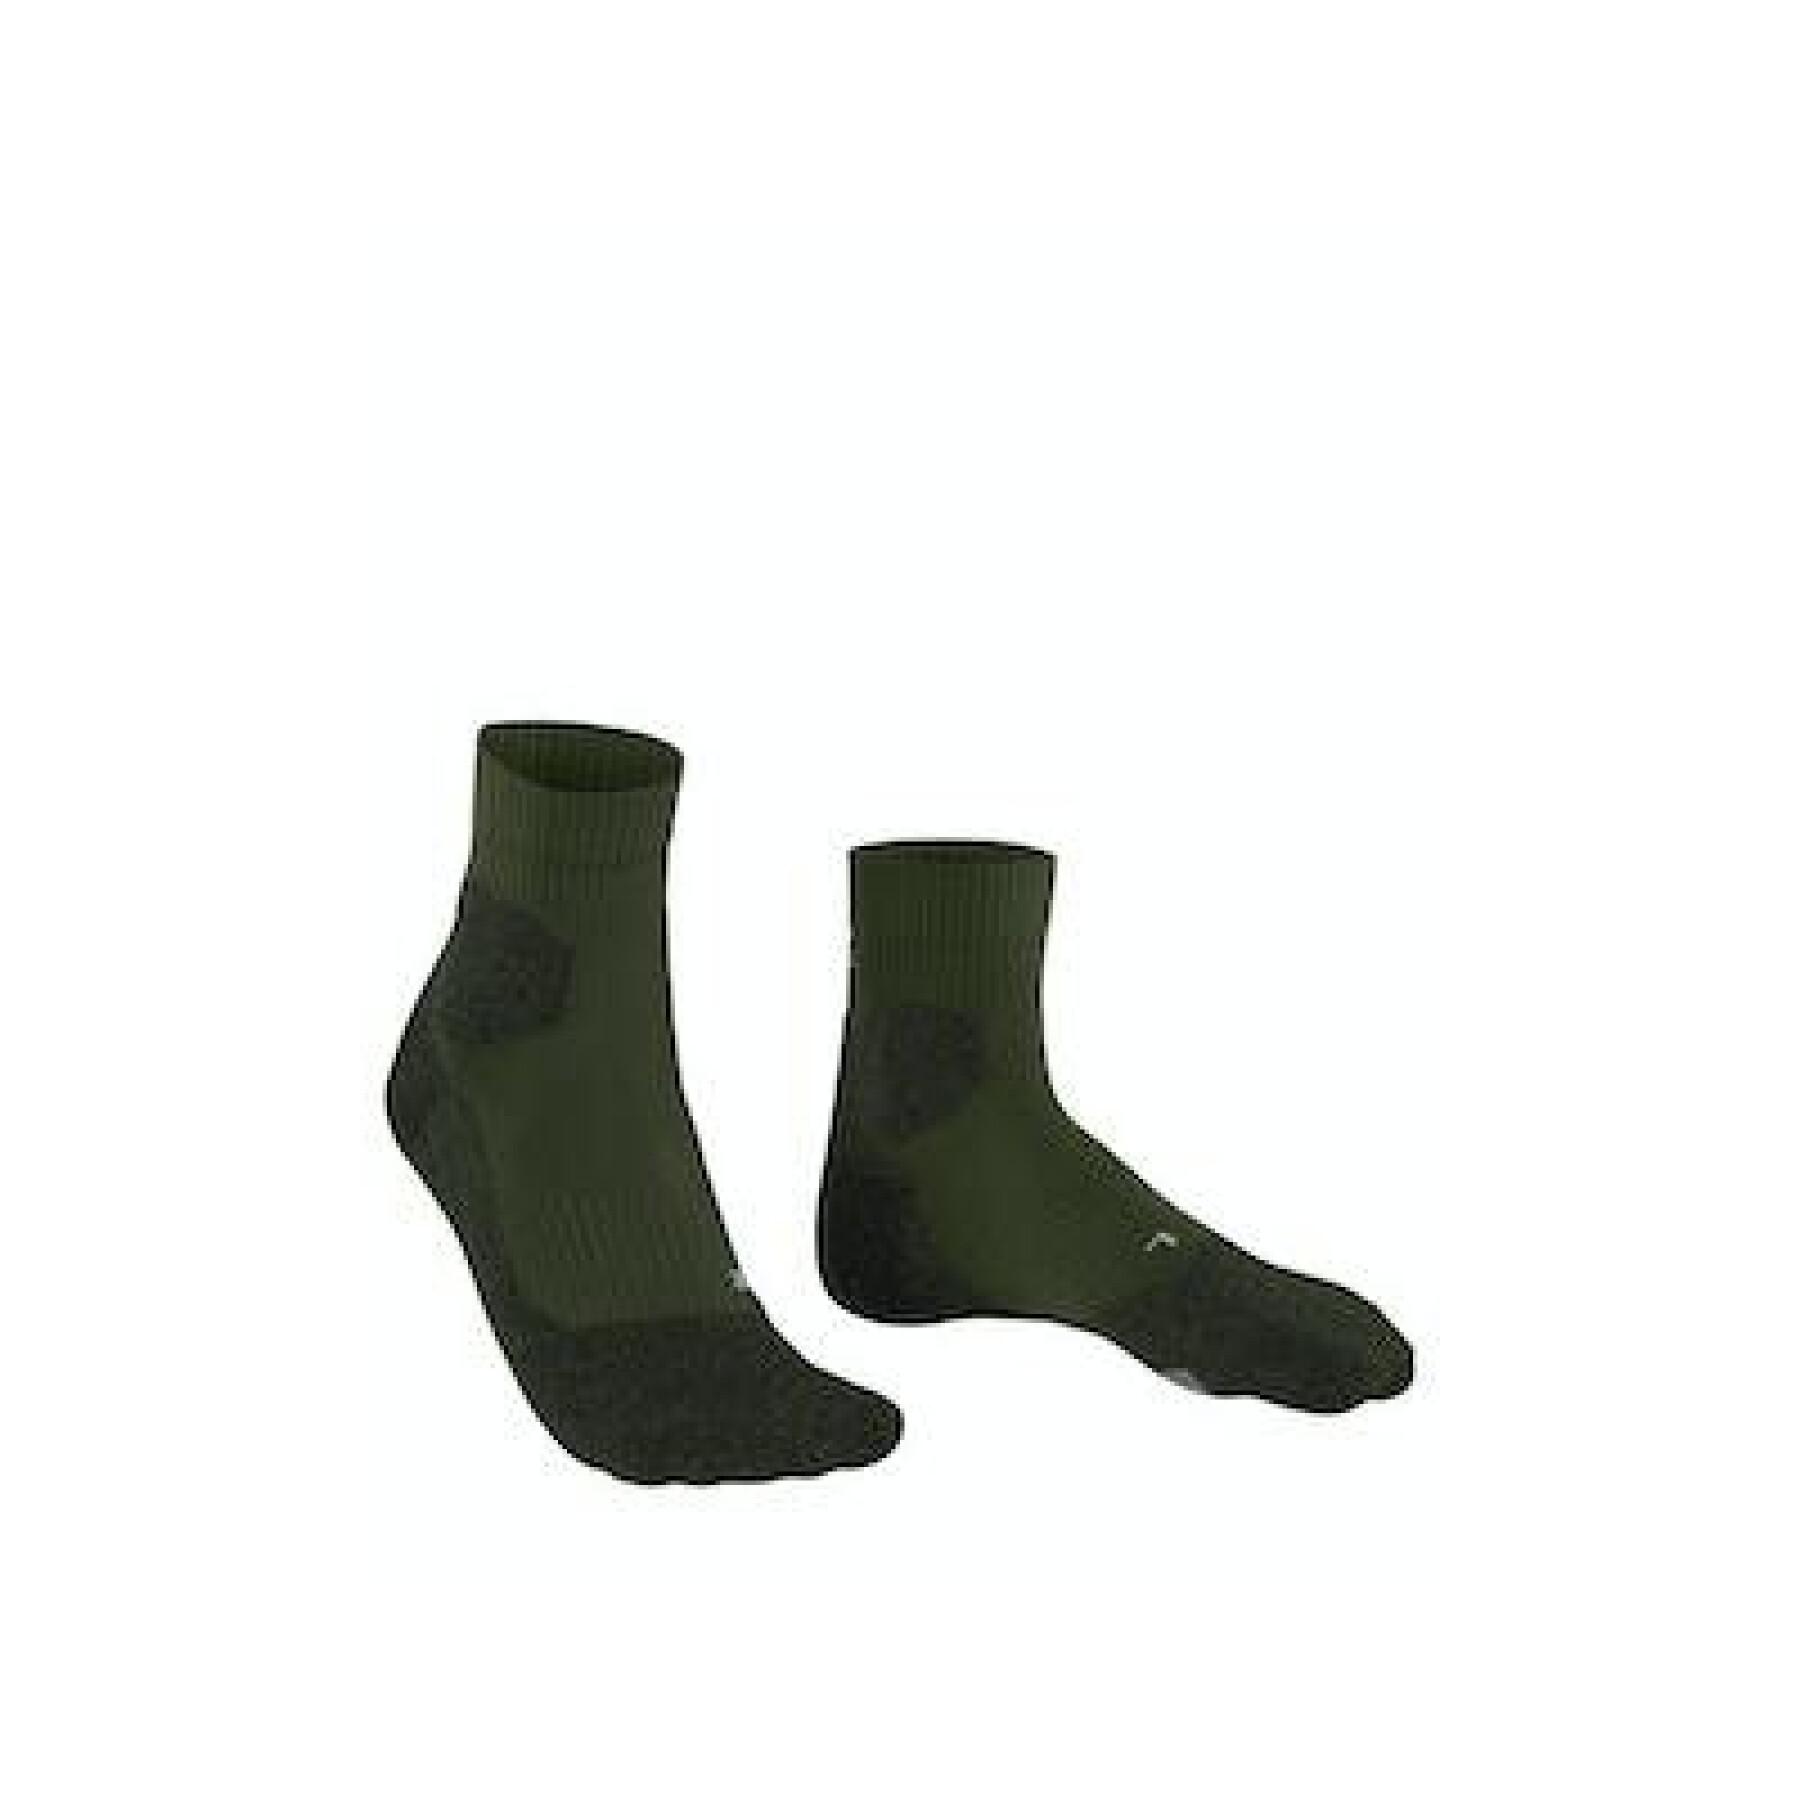 Falke Mens RU Trail Grip Socks - Black